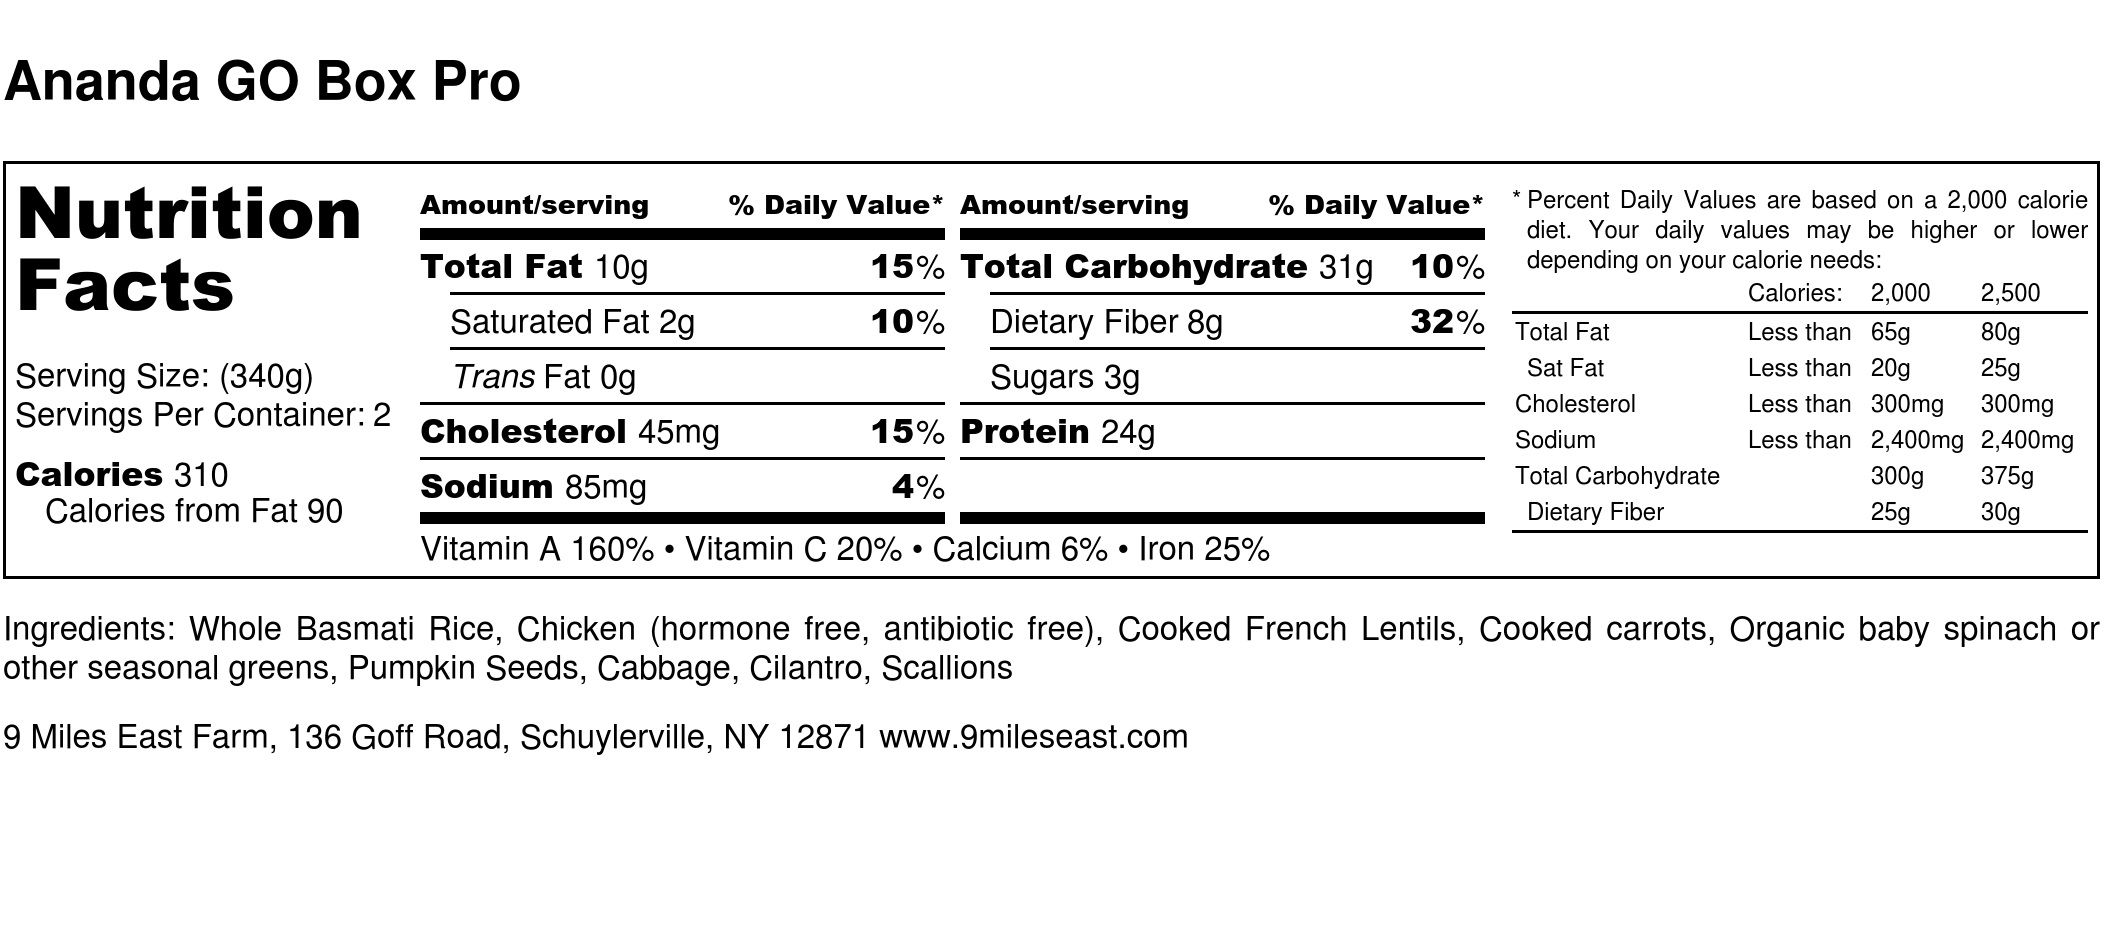 Ananda GO Box Pro - Nutrition Label.jpg